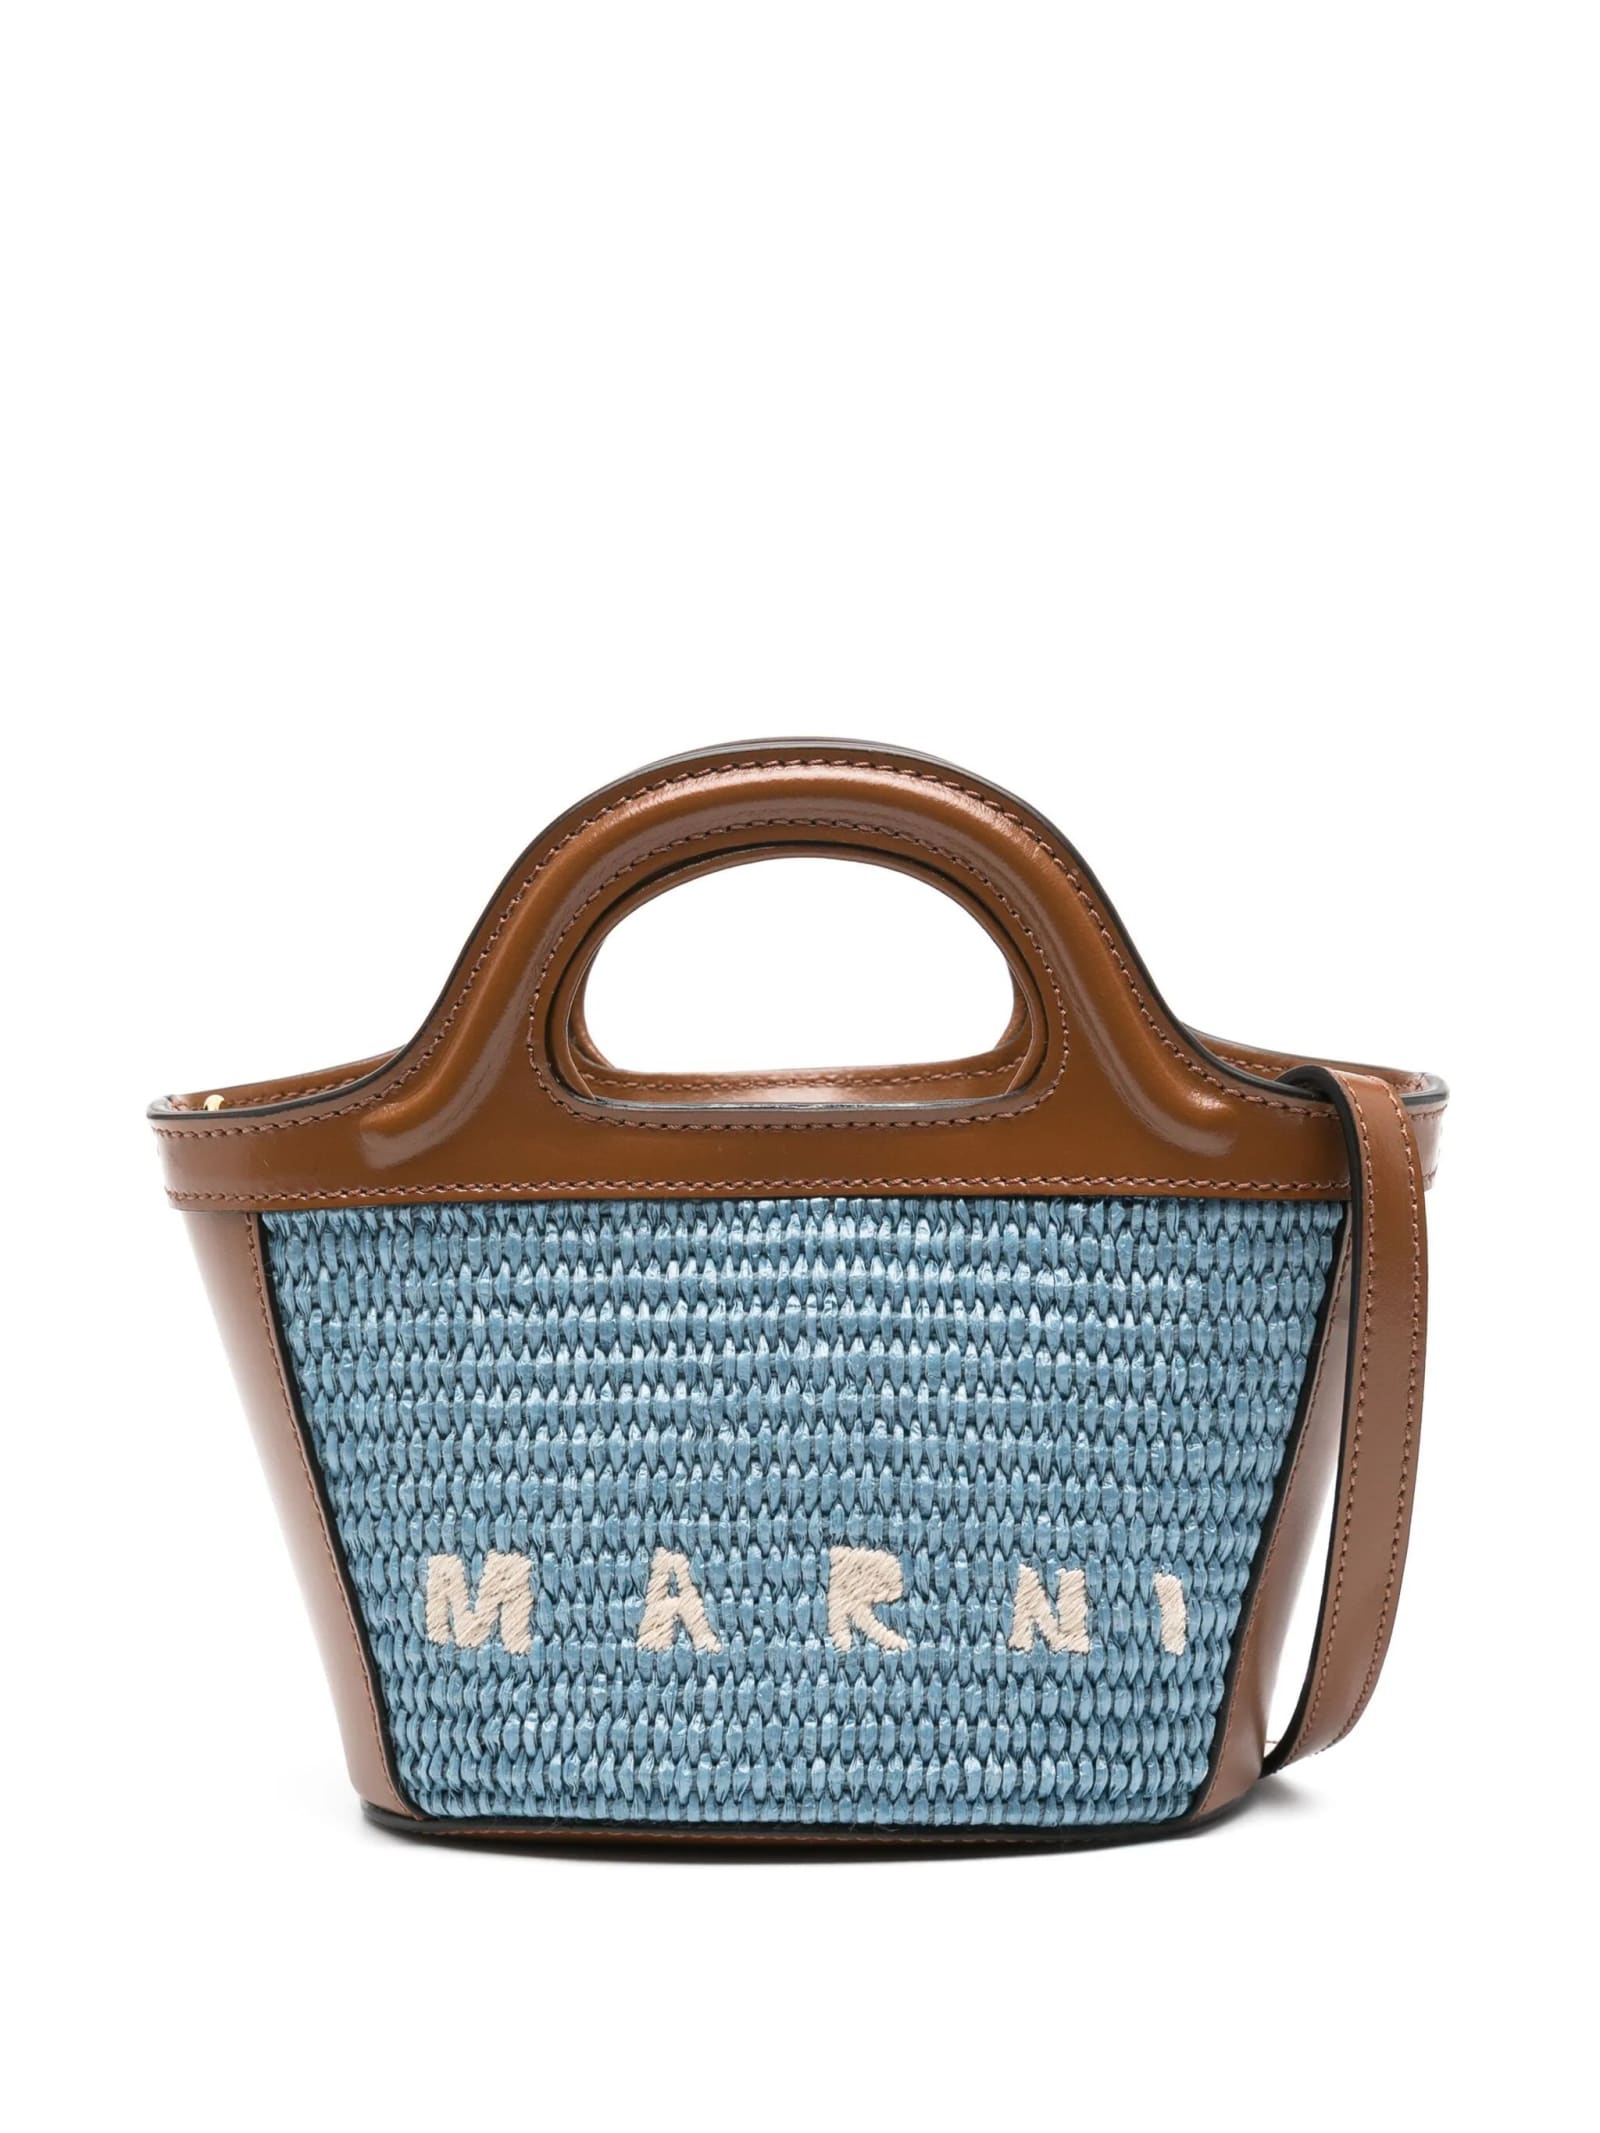 Marni Micro Tropicalia Summer Bag In Brown Leather And Light Blue Raffia